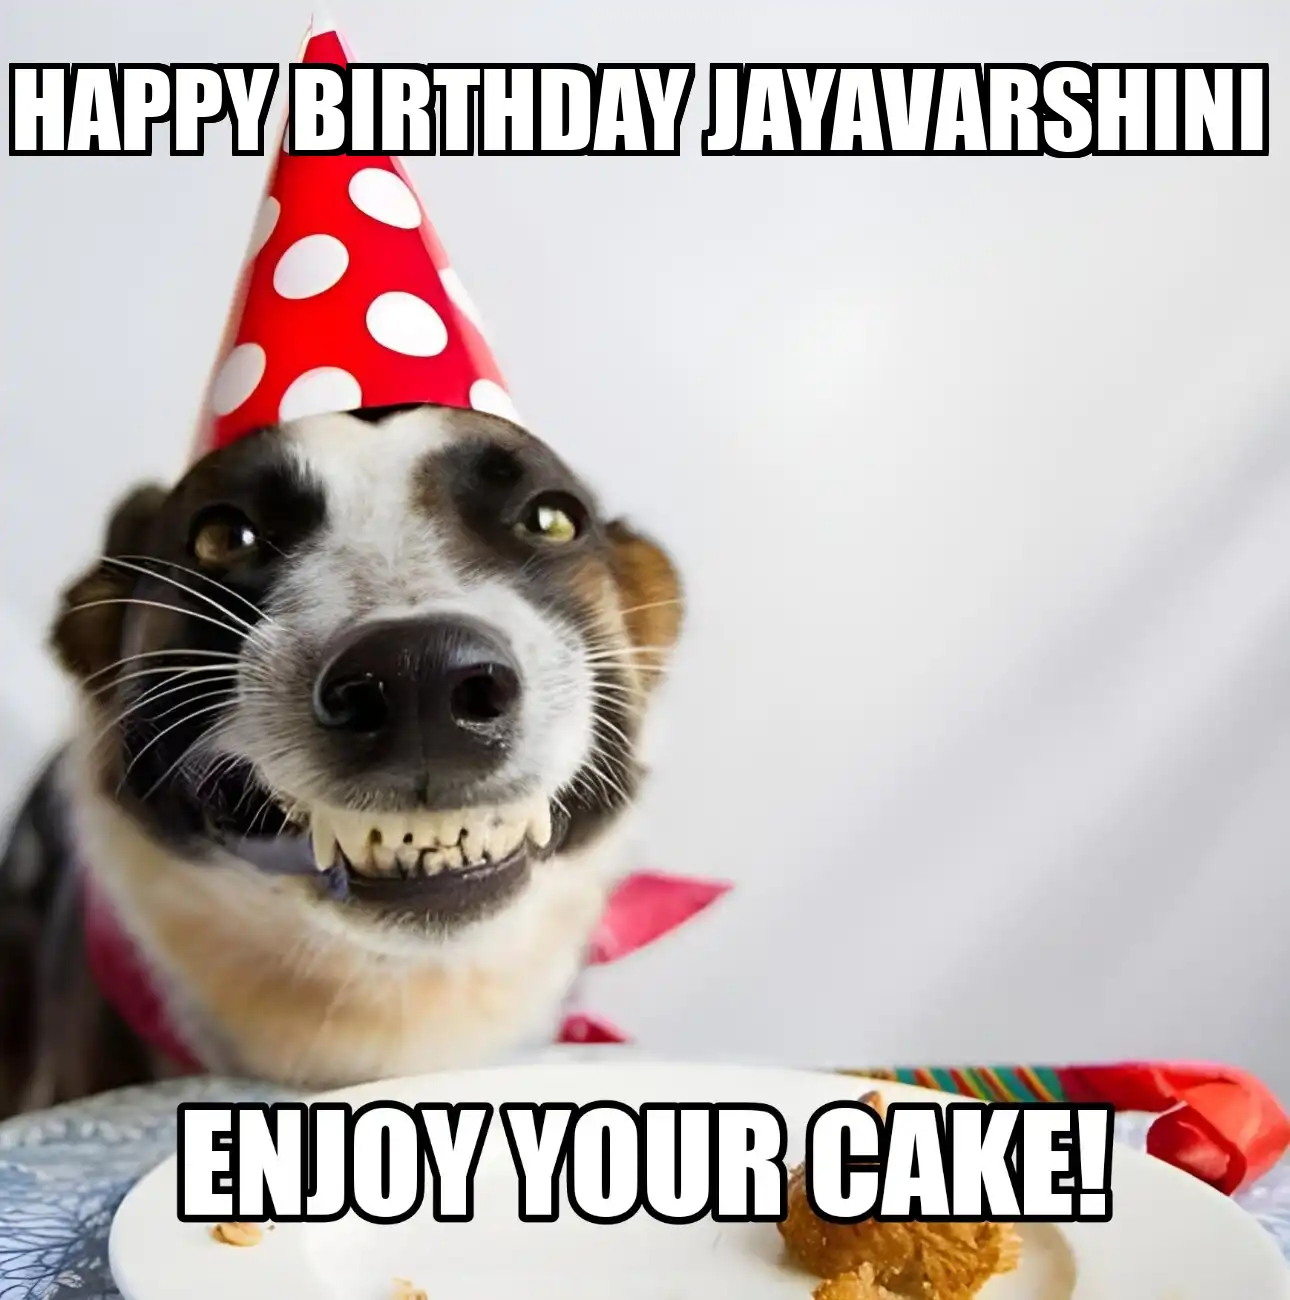 Happy Birthday Jayavarshini Enjoy Your Cake Dog Meme